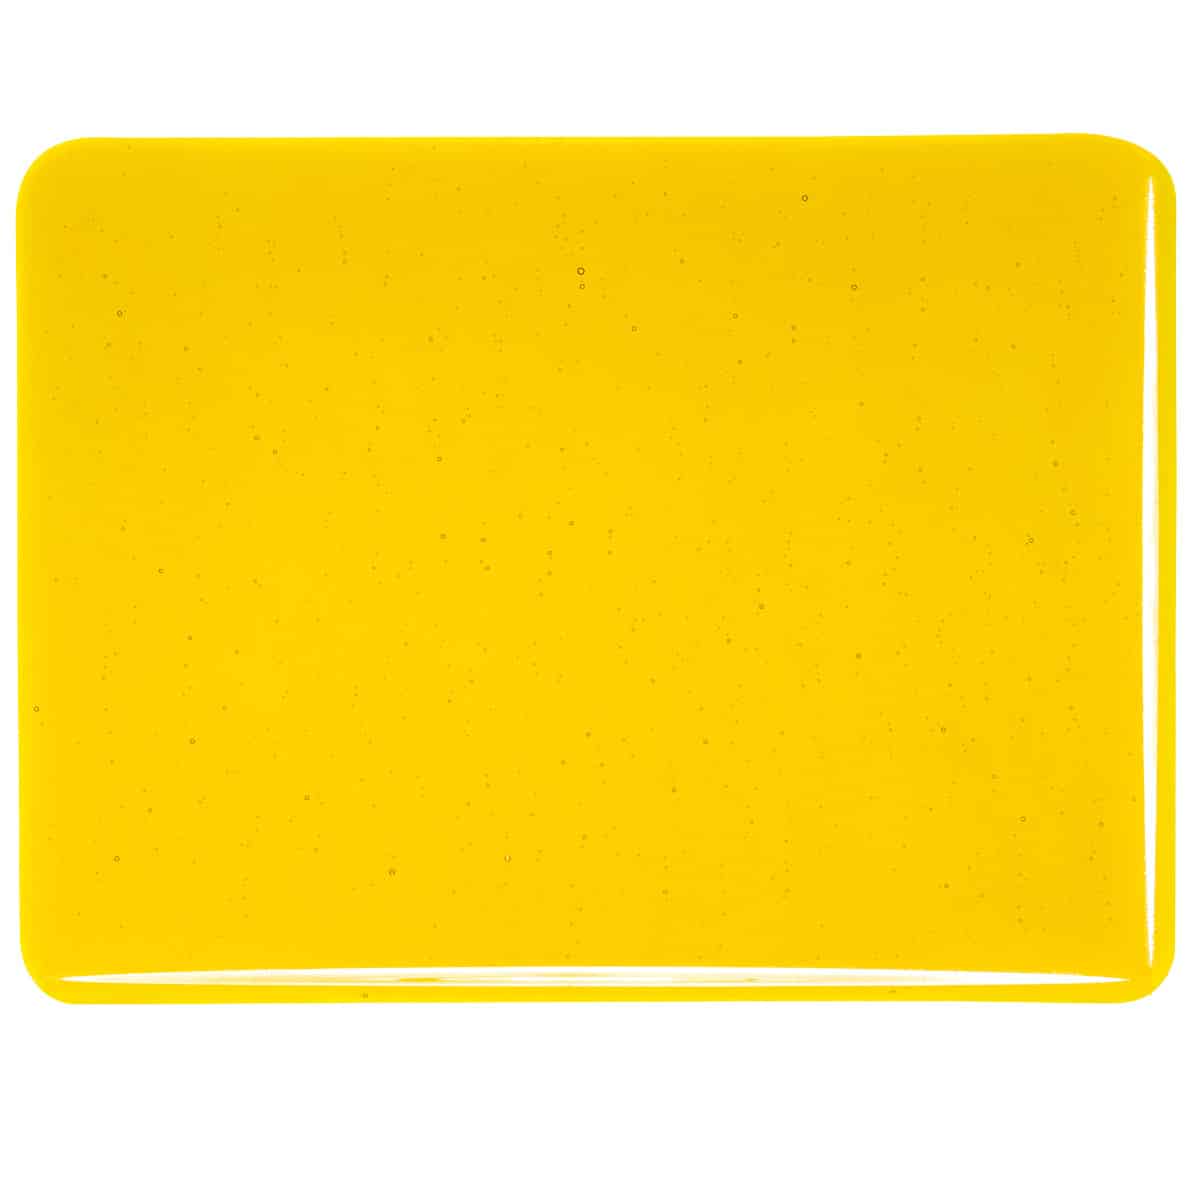 001120 Transparent Yellow sheet glass swatch